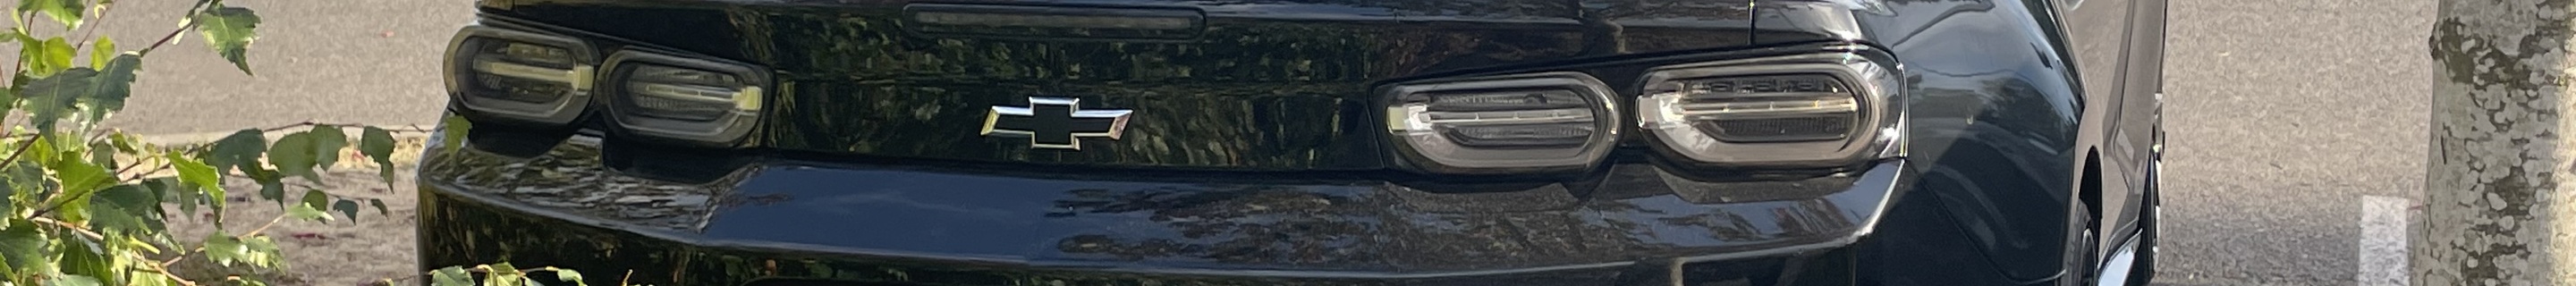 Chevrolet Camaro SS 1LE 2019